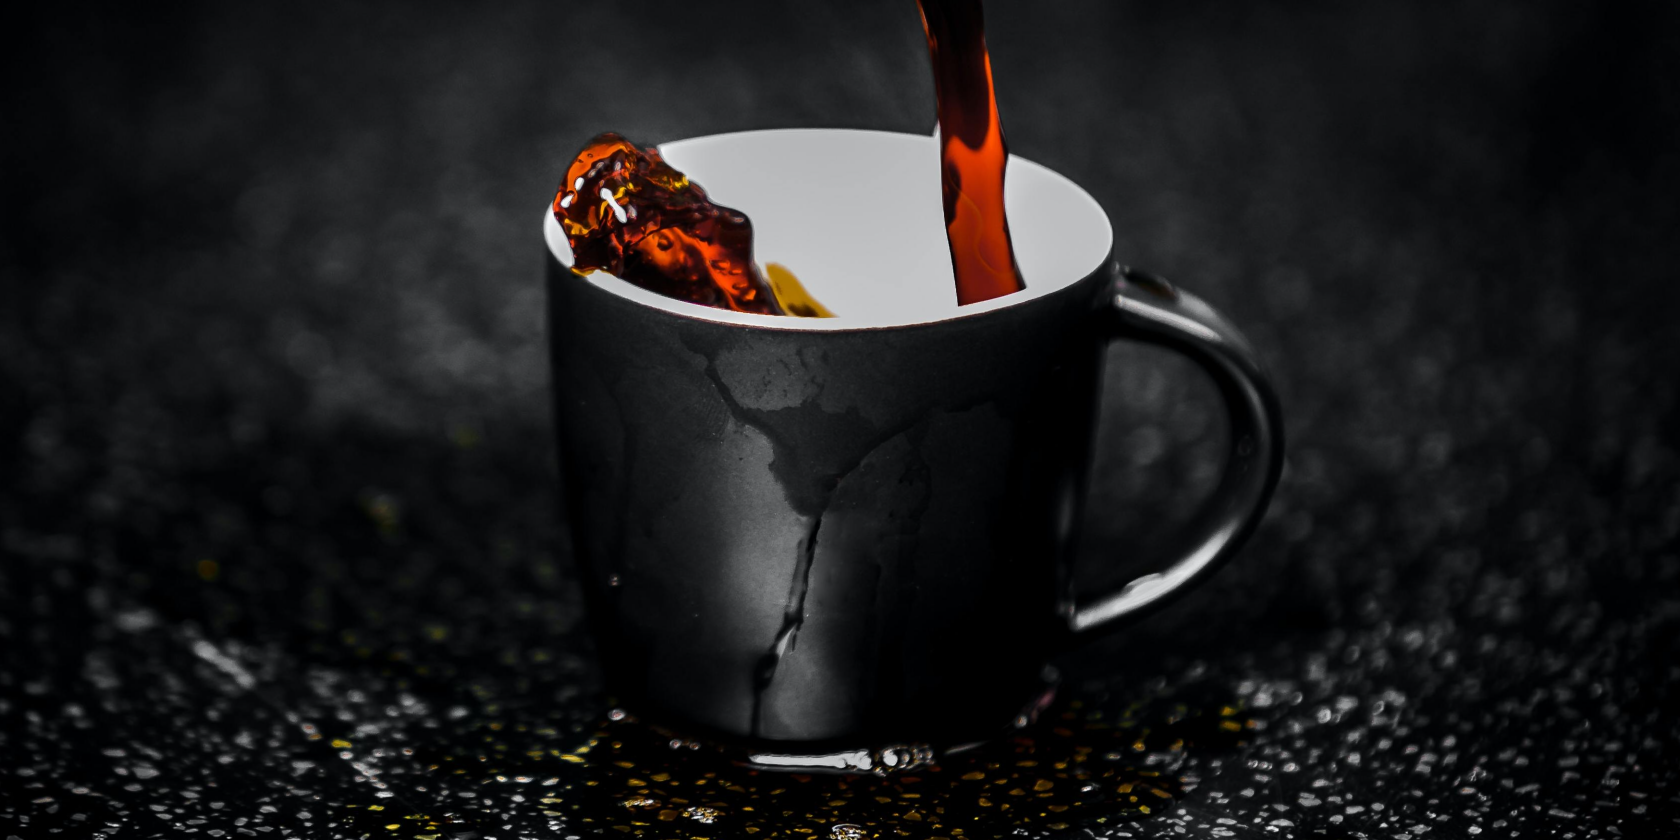 coffee cup